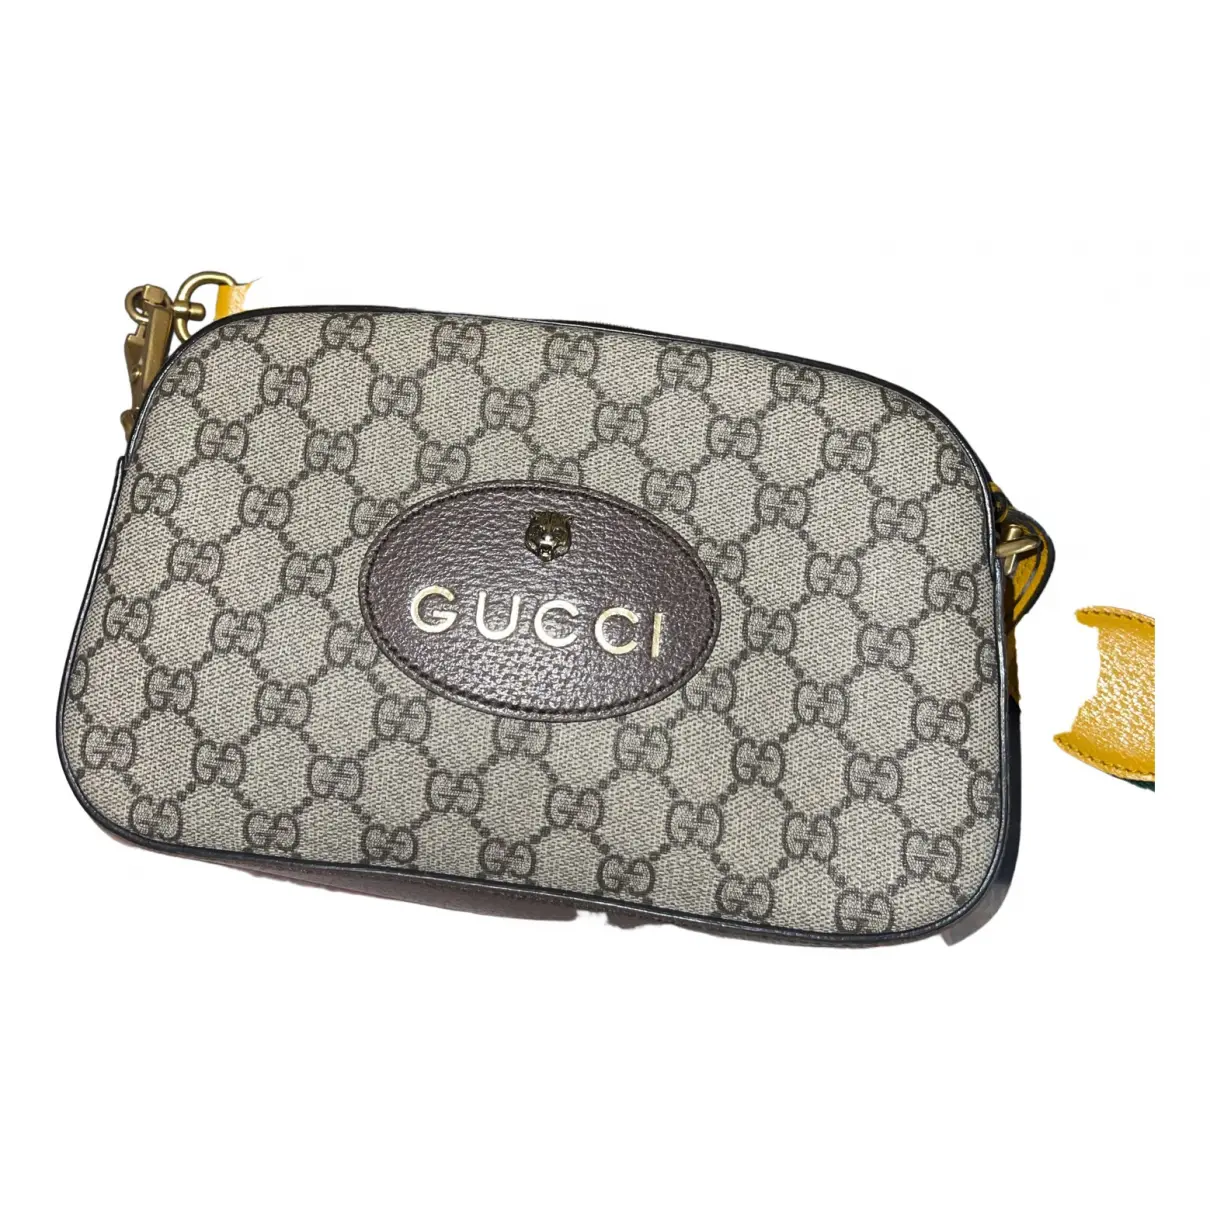 Neo Vintage leather handbag Gucci